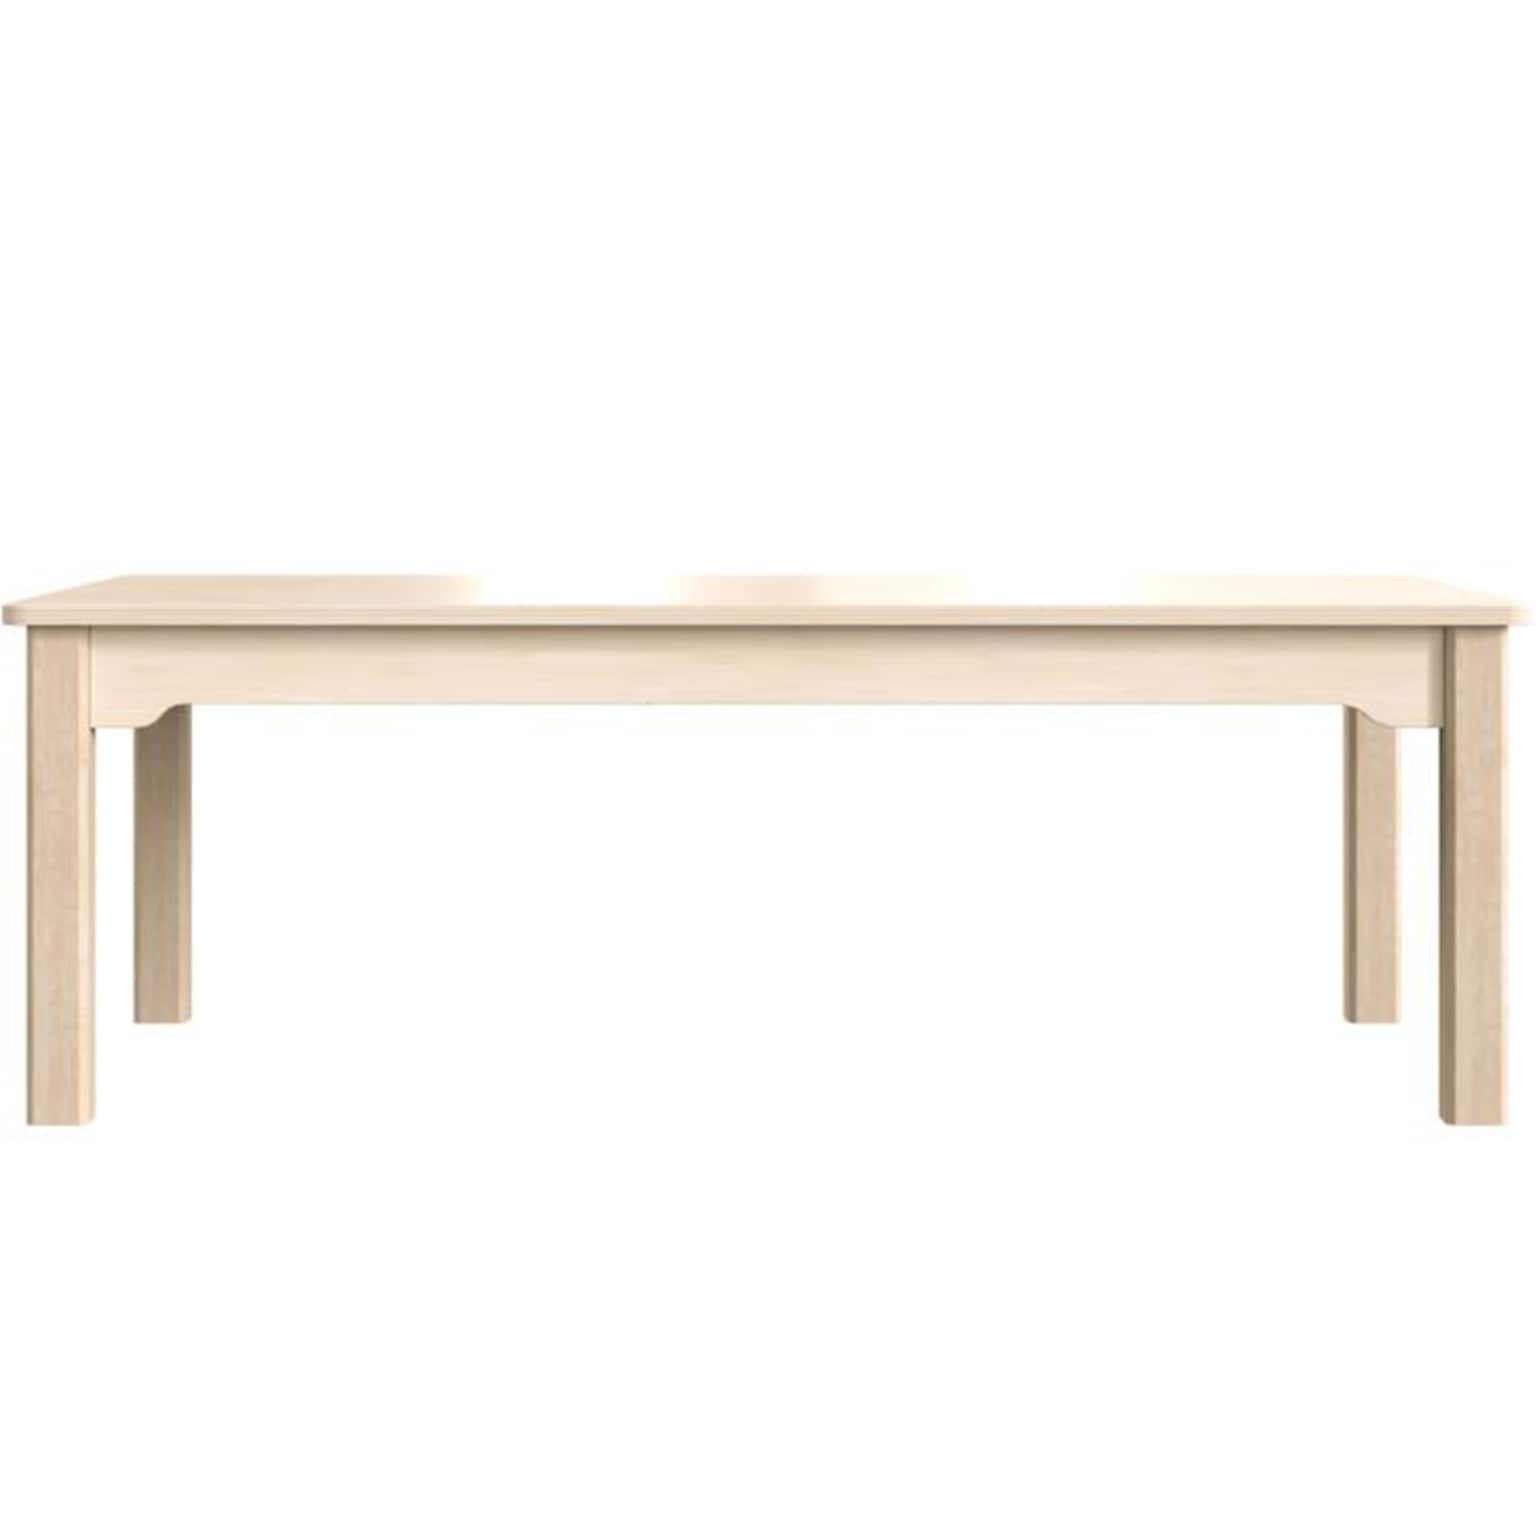 Flash Furniture Bright Beginnings Hercules Rectangular Table, 47.25 x 23.5, Beech (MK-ME088010-GG)